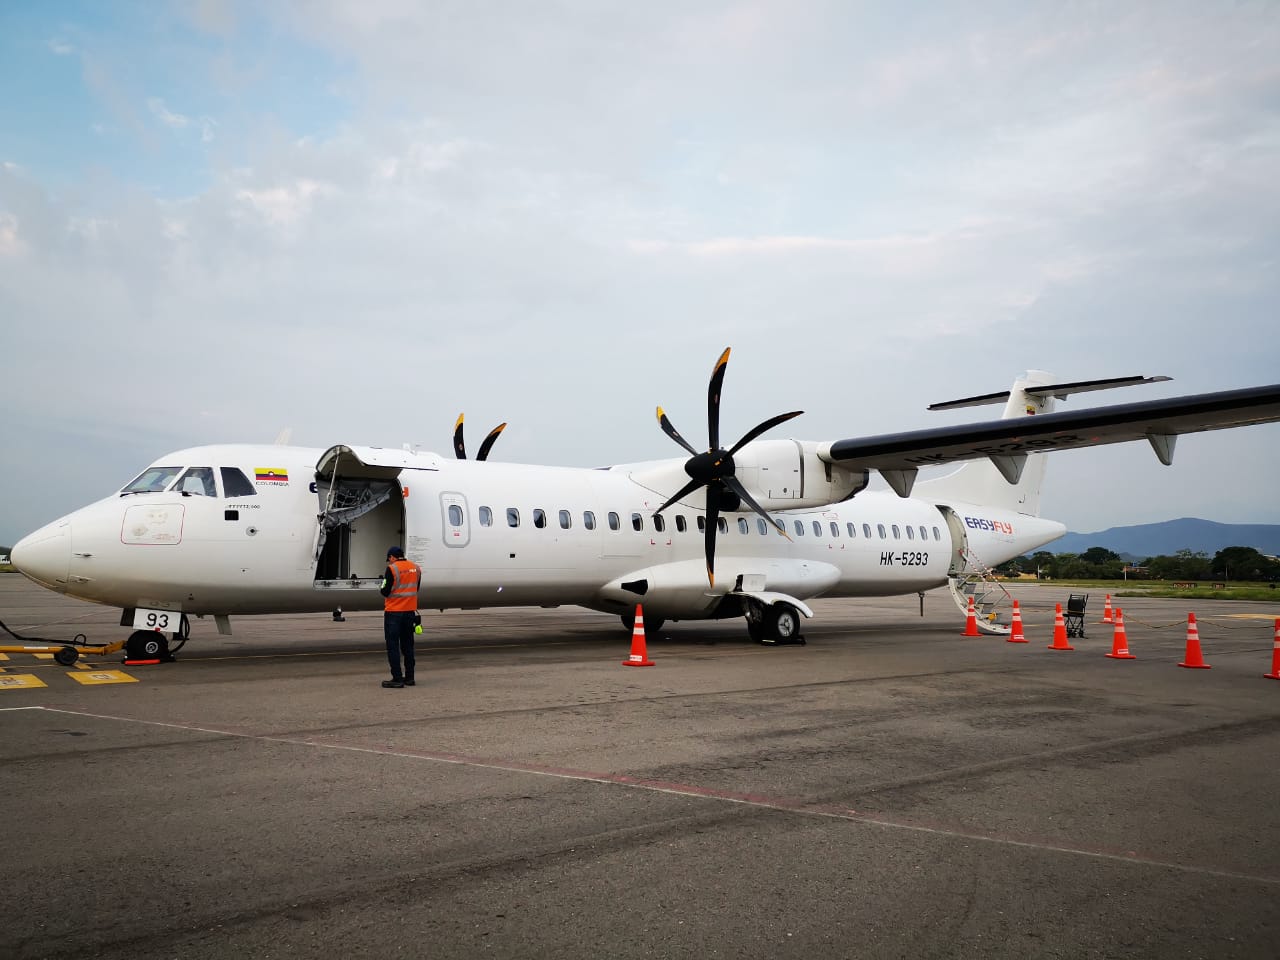 Easyfly ATR 06-2021